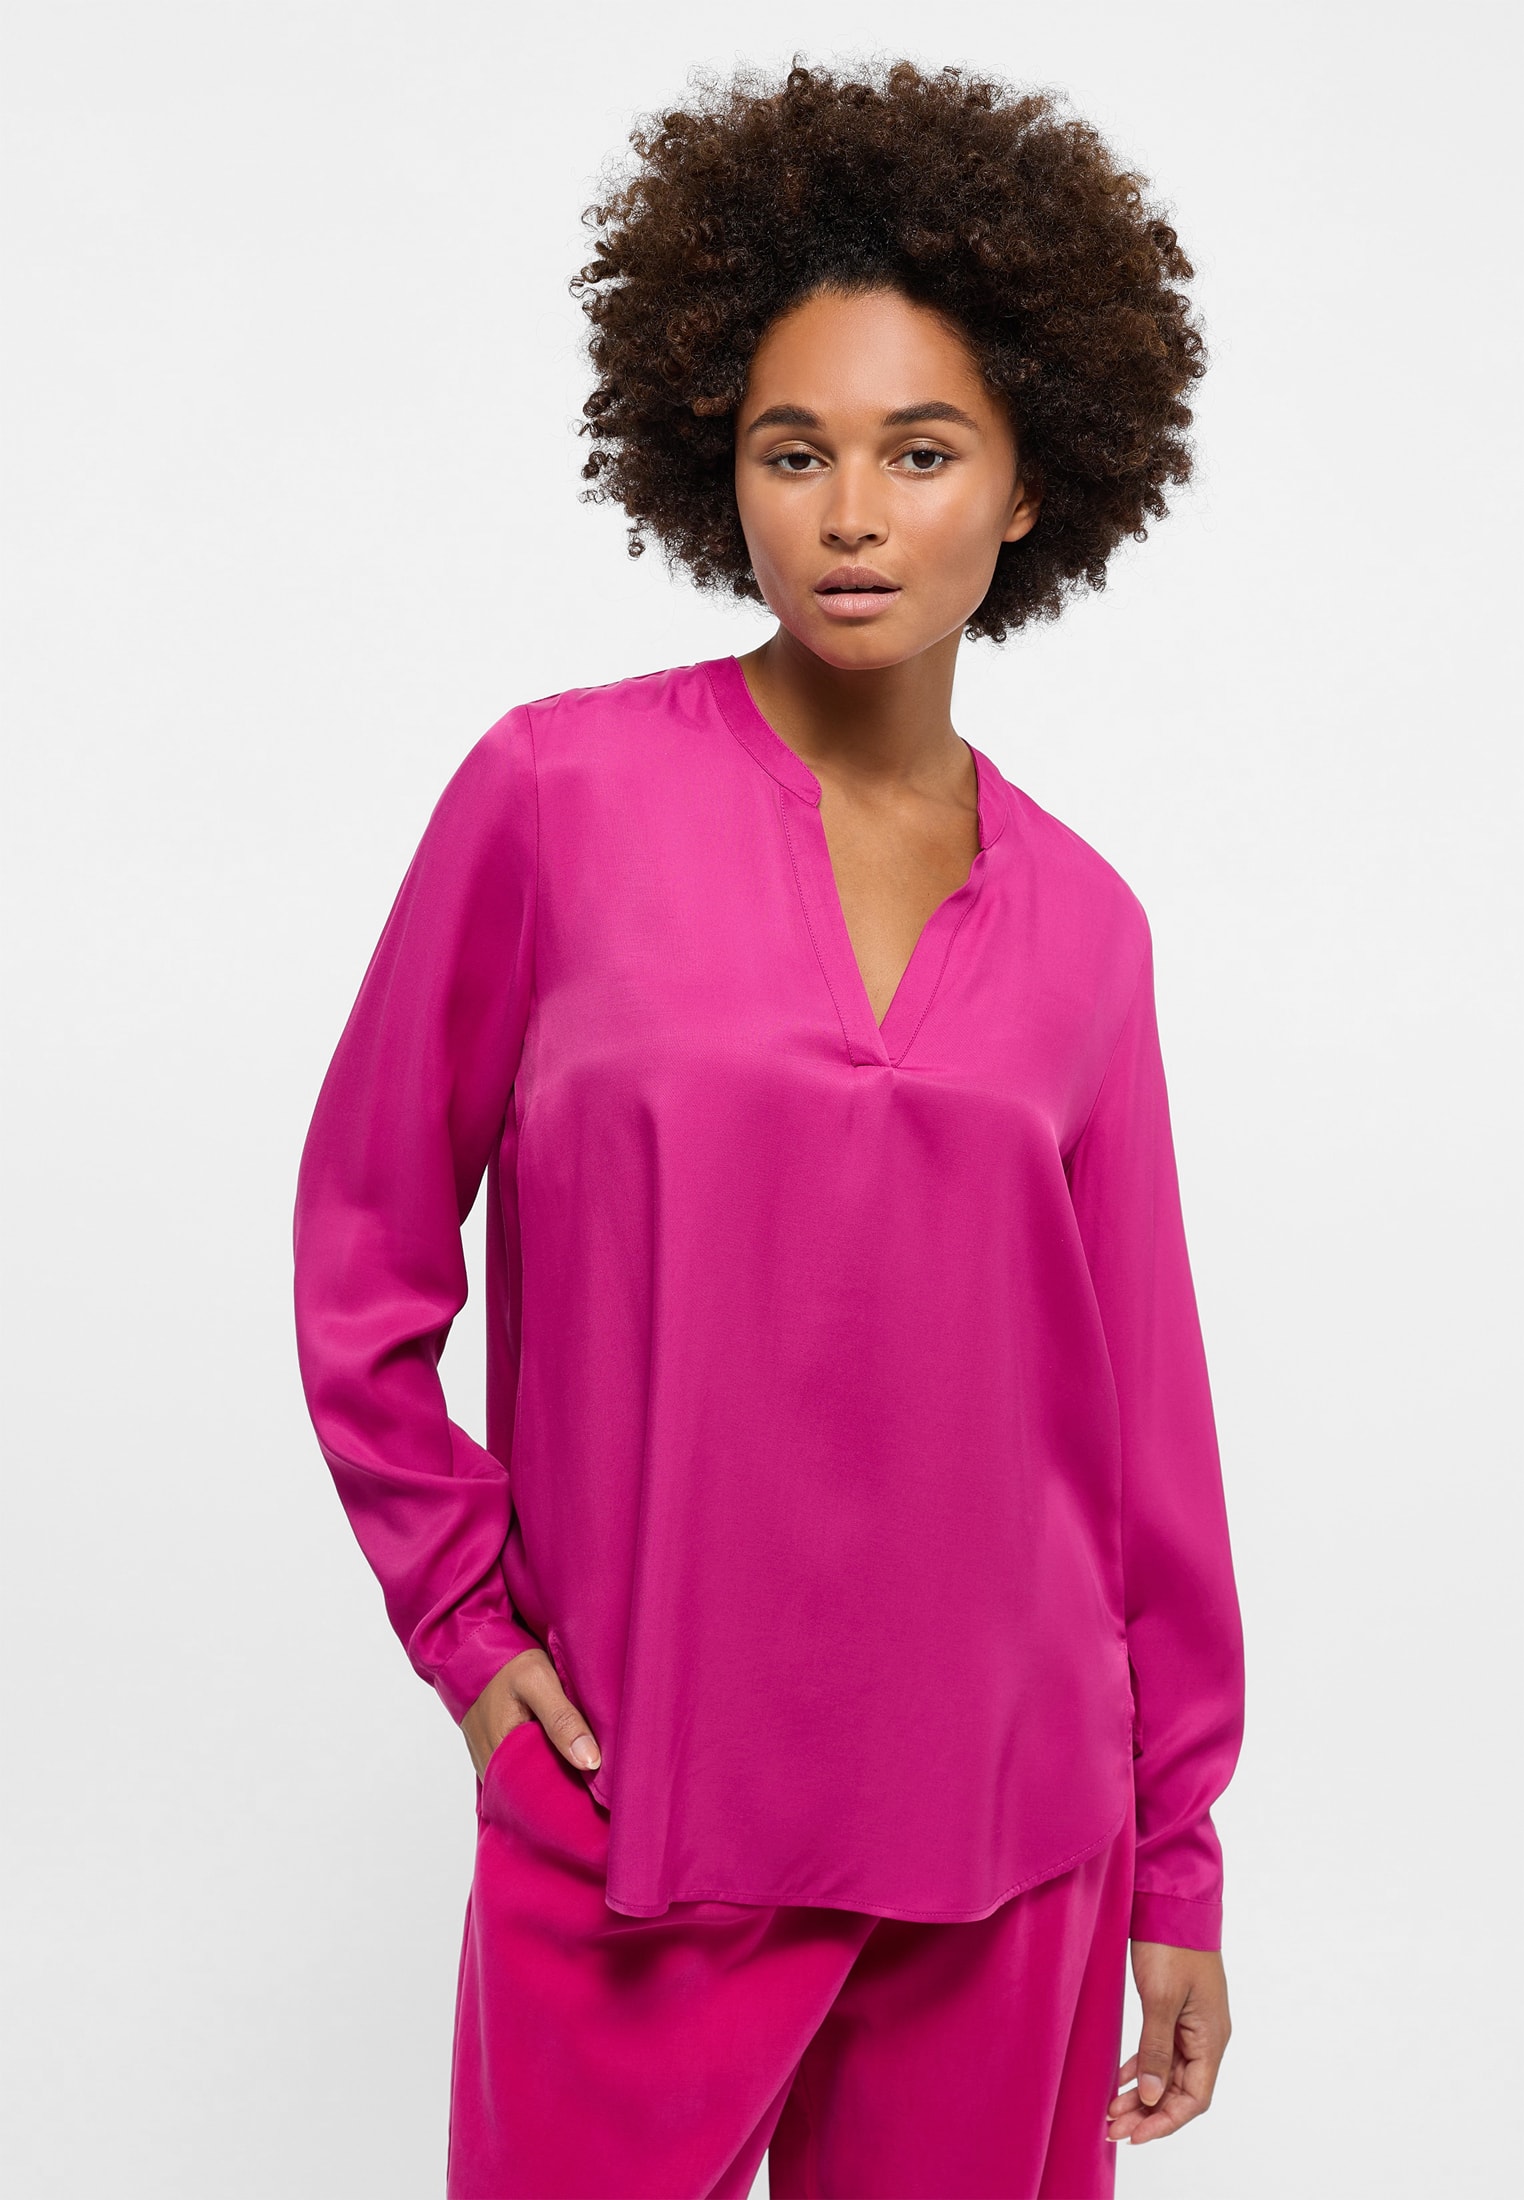 38 | pink pink Shirt | | Bluse 2BL00329-15-31-38-1/1 | unifarben in Viscose Langarm vibrant vibrant